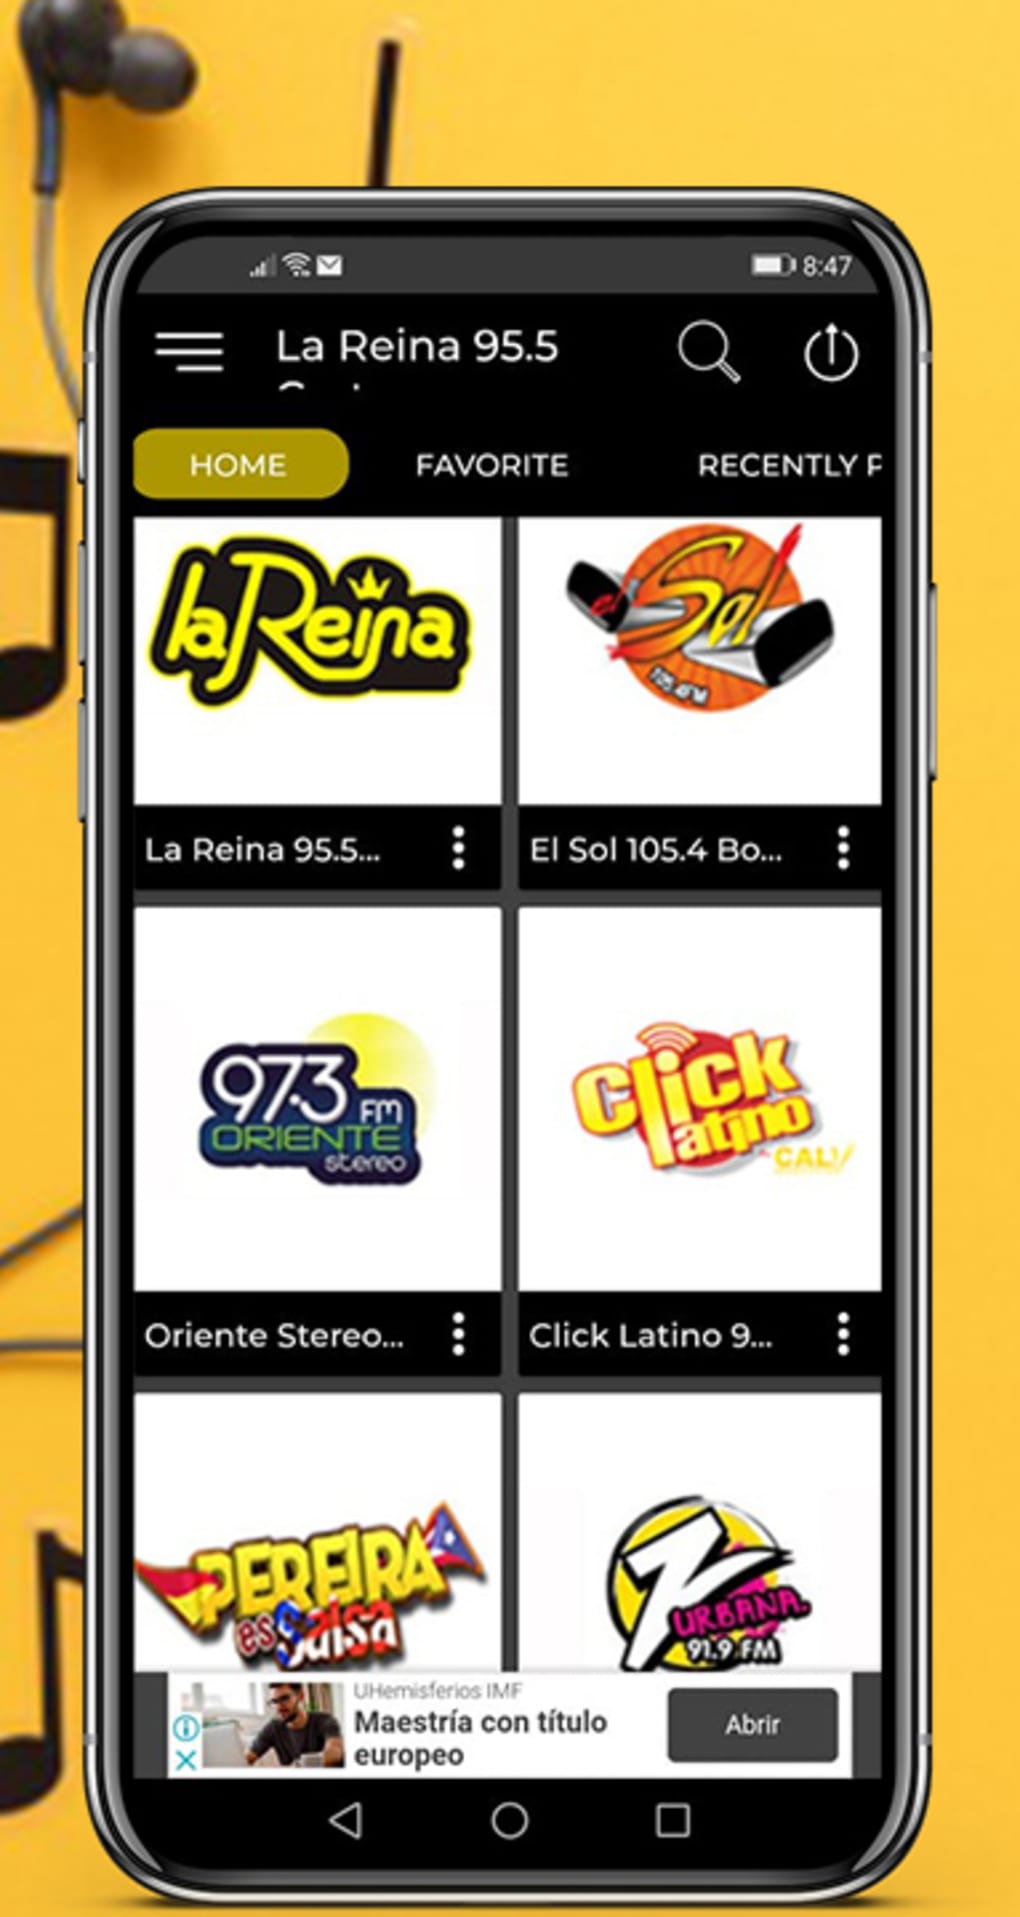 Emisora La Reina - Apps on Google Play